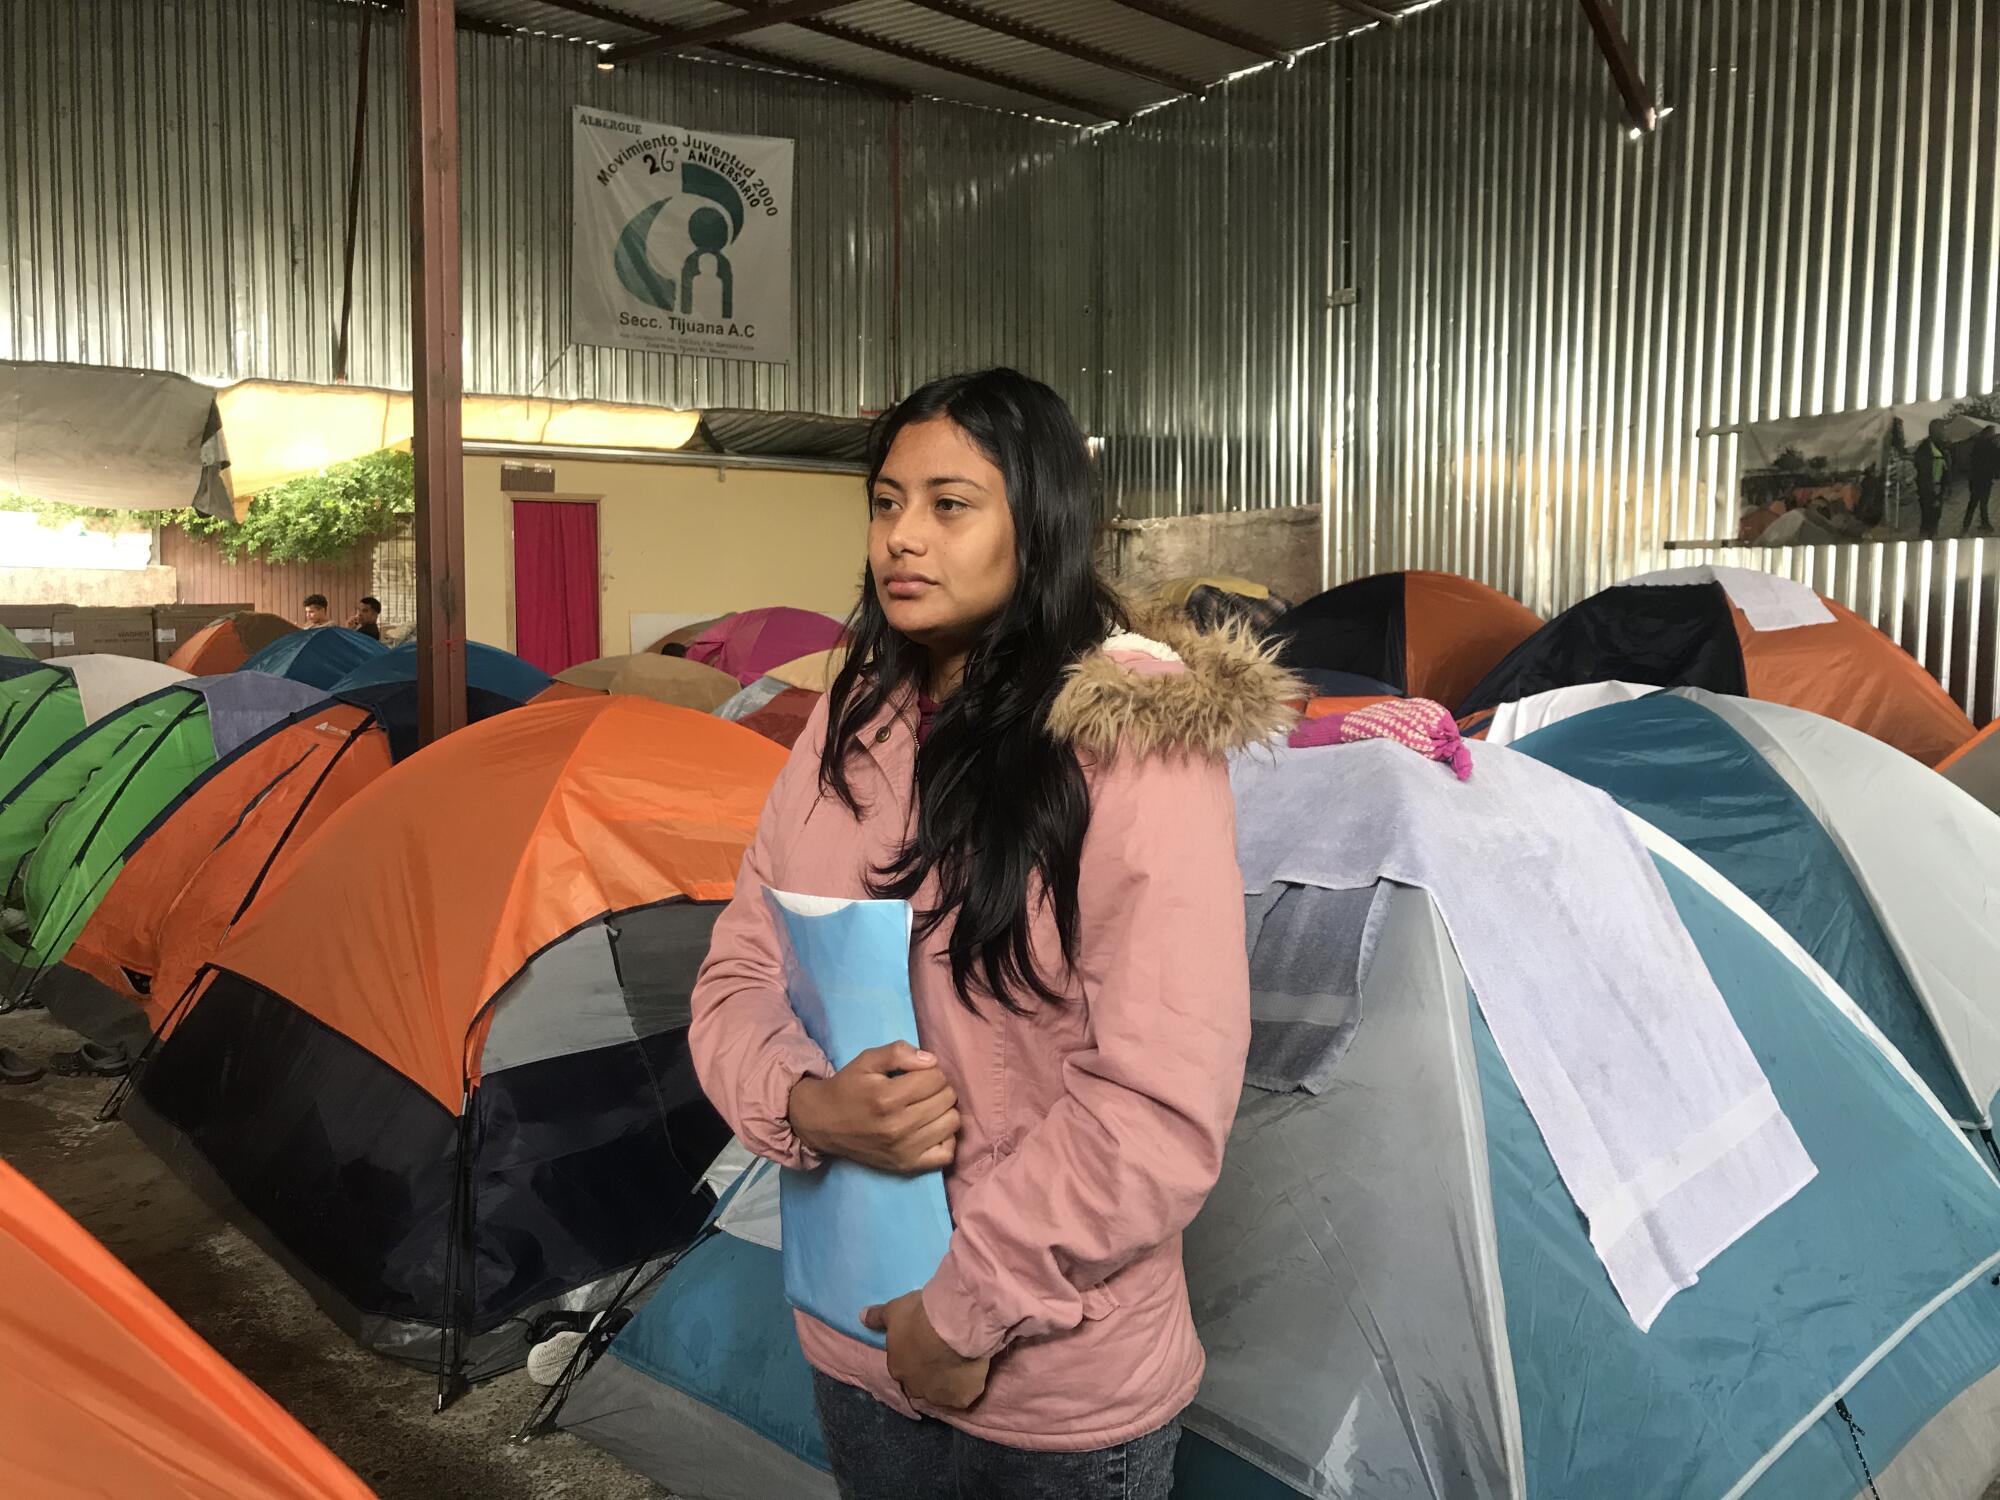 Seeking asylum in the U.S., Daniela Diaz instead found herself returned to Tijuana